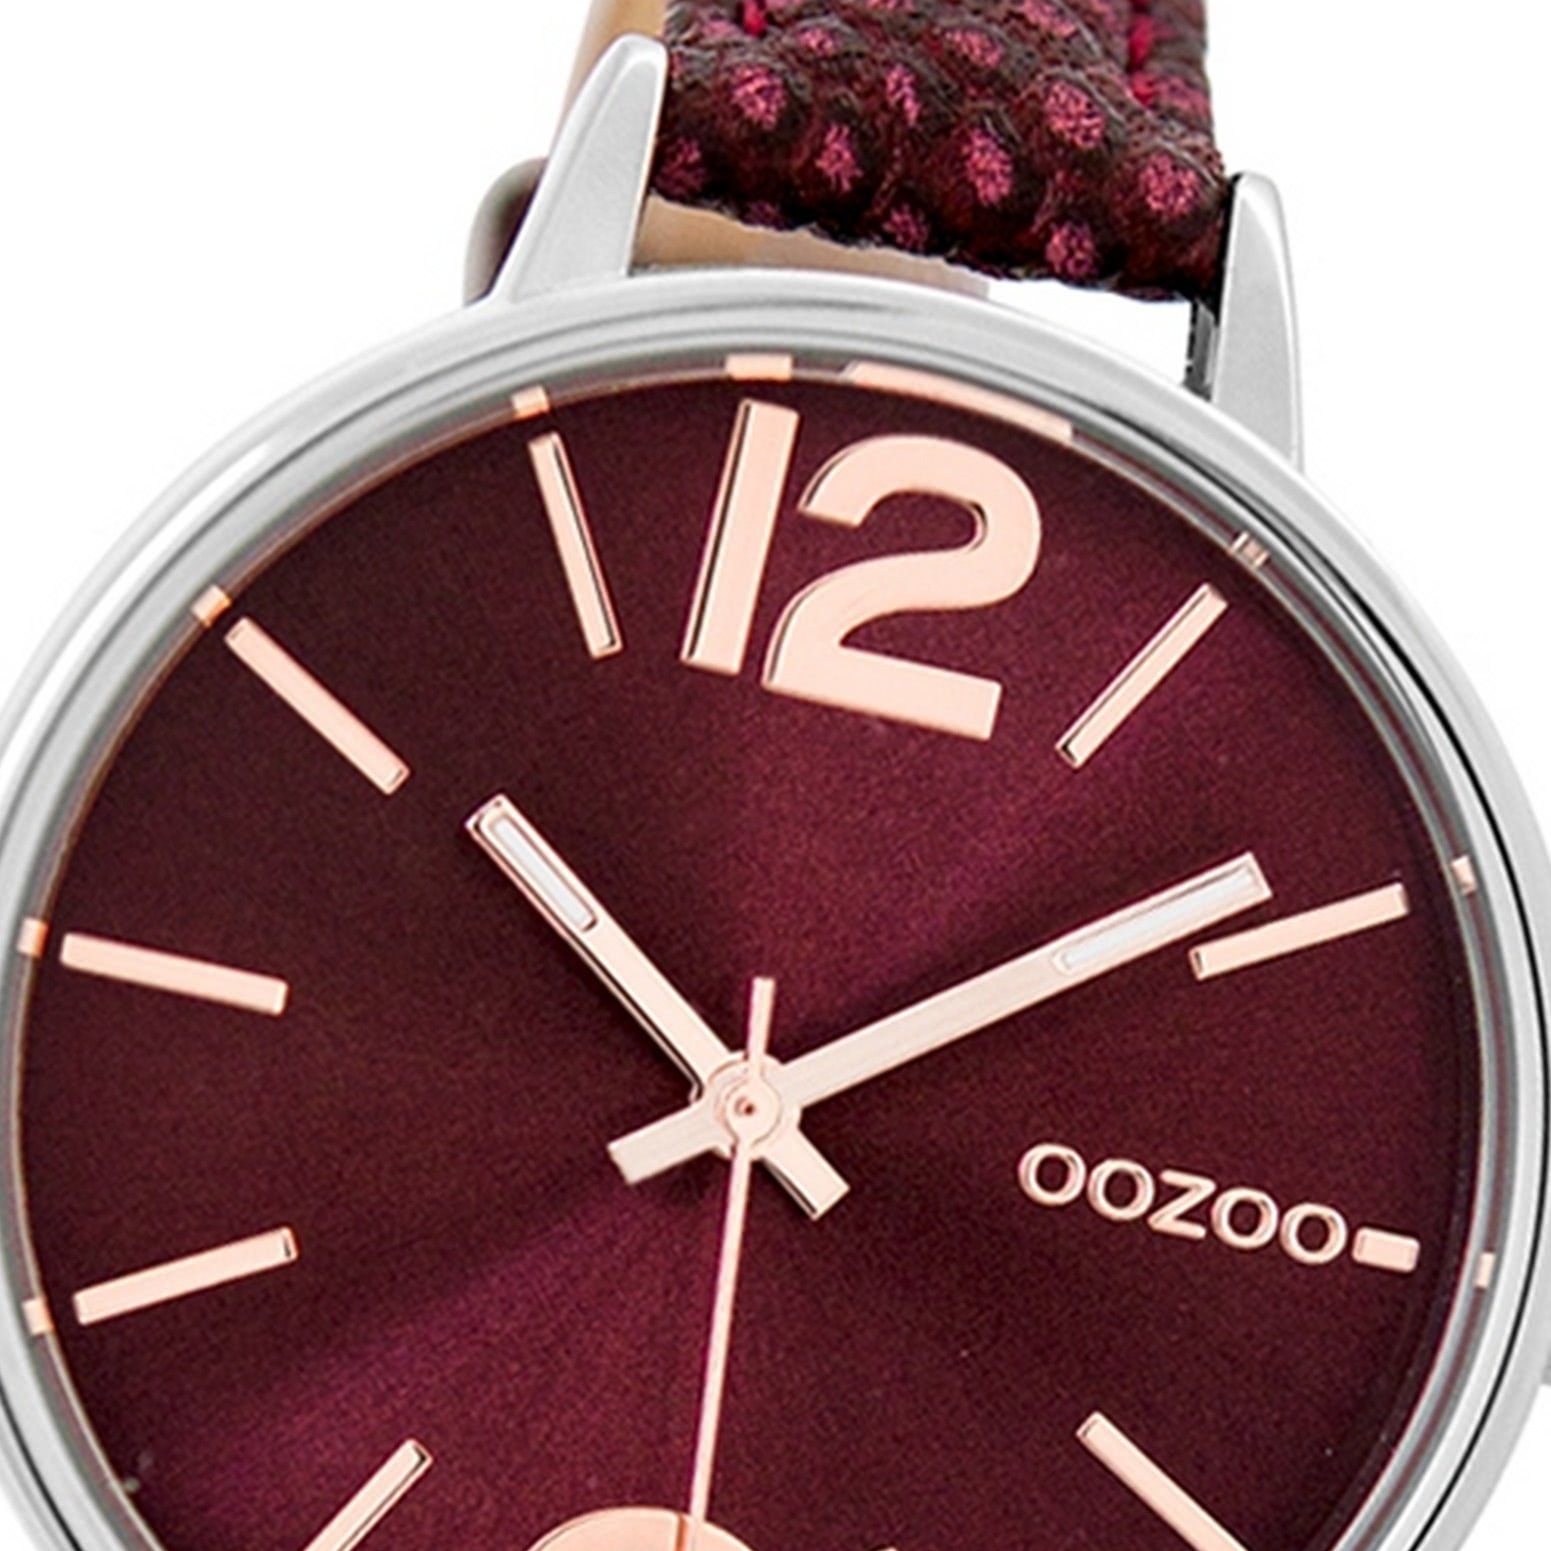 Oozoo Lederarmband, rund, OOZOO (ca. Damenuhr Fashion-Style mittel weinrot, 38mm) Damen Armband-Uhr Quarzuhr